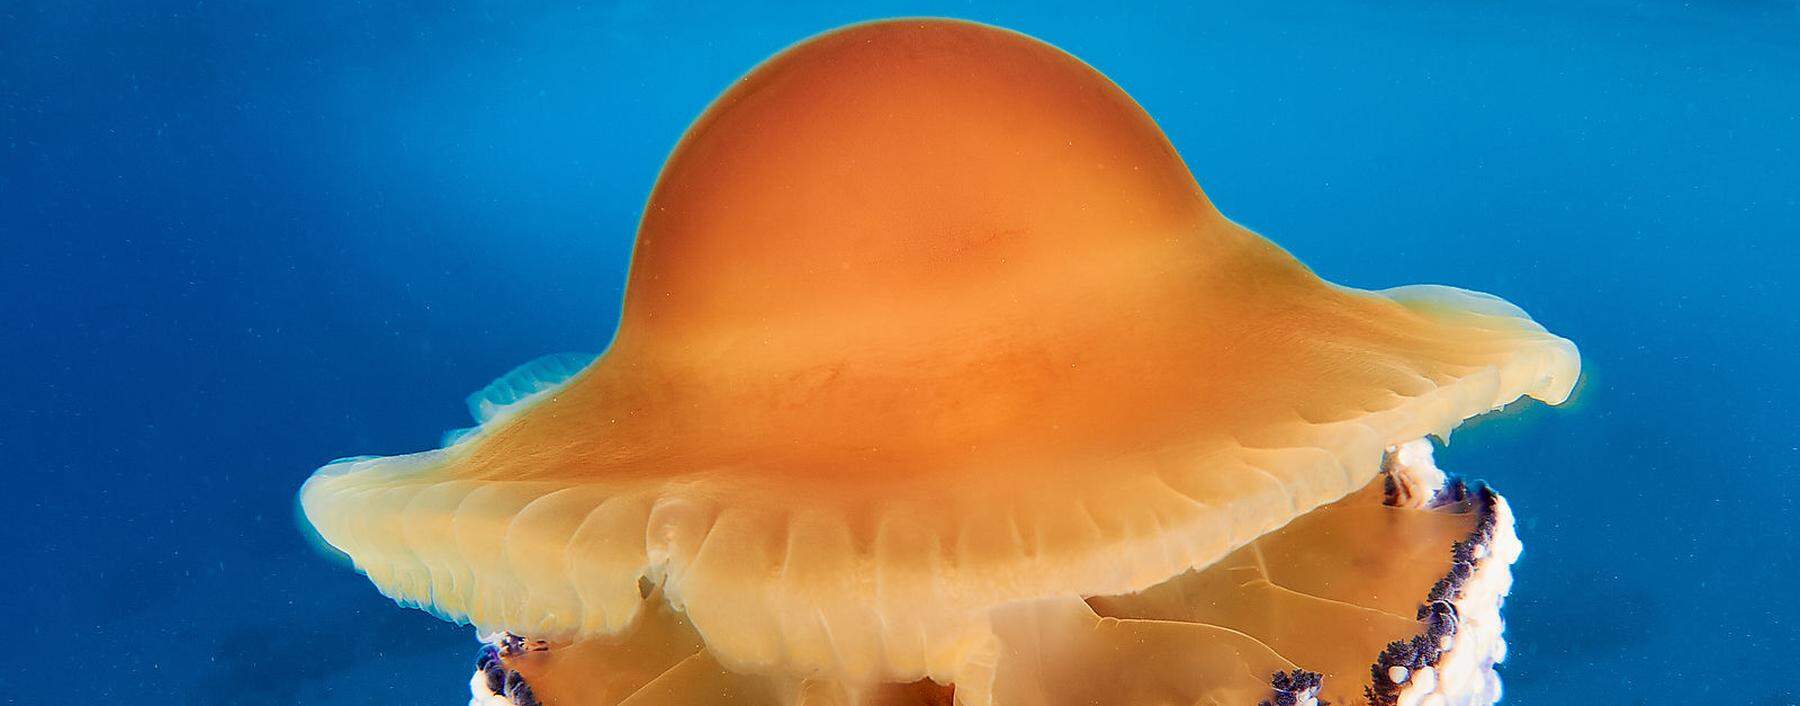 Mediterranean Fried Egg Jellyfish - Cotylorhiza tuberculata